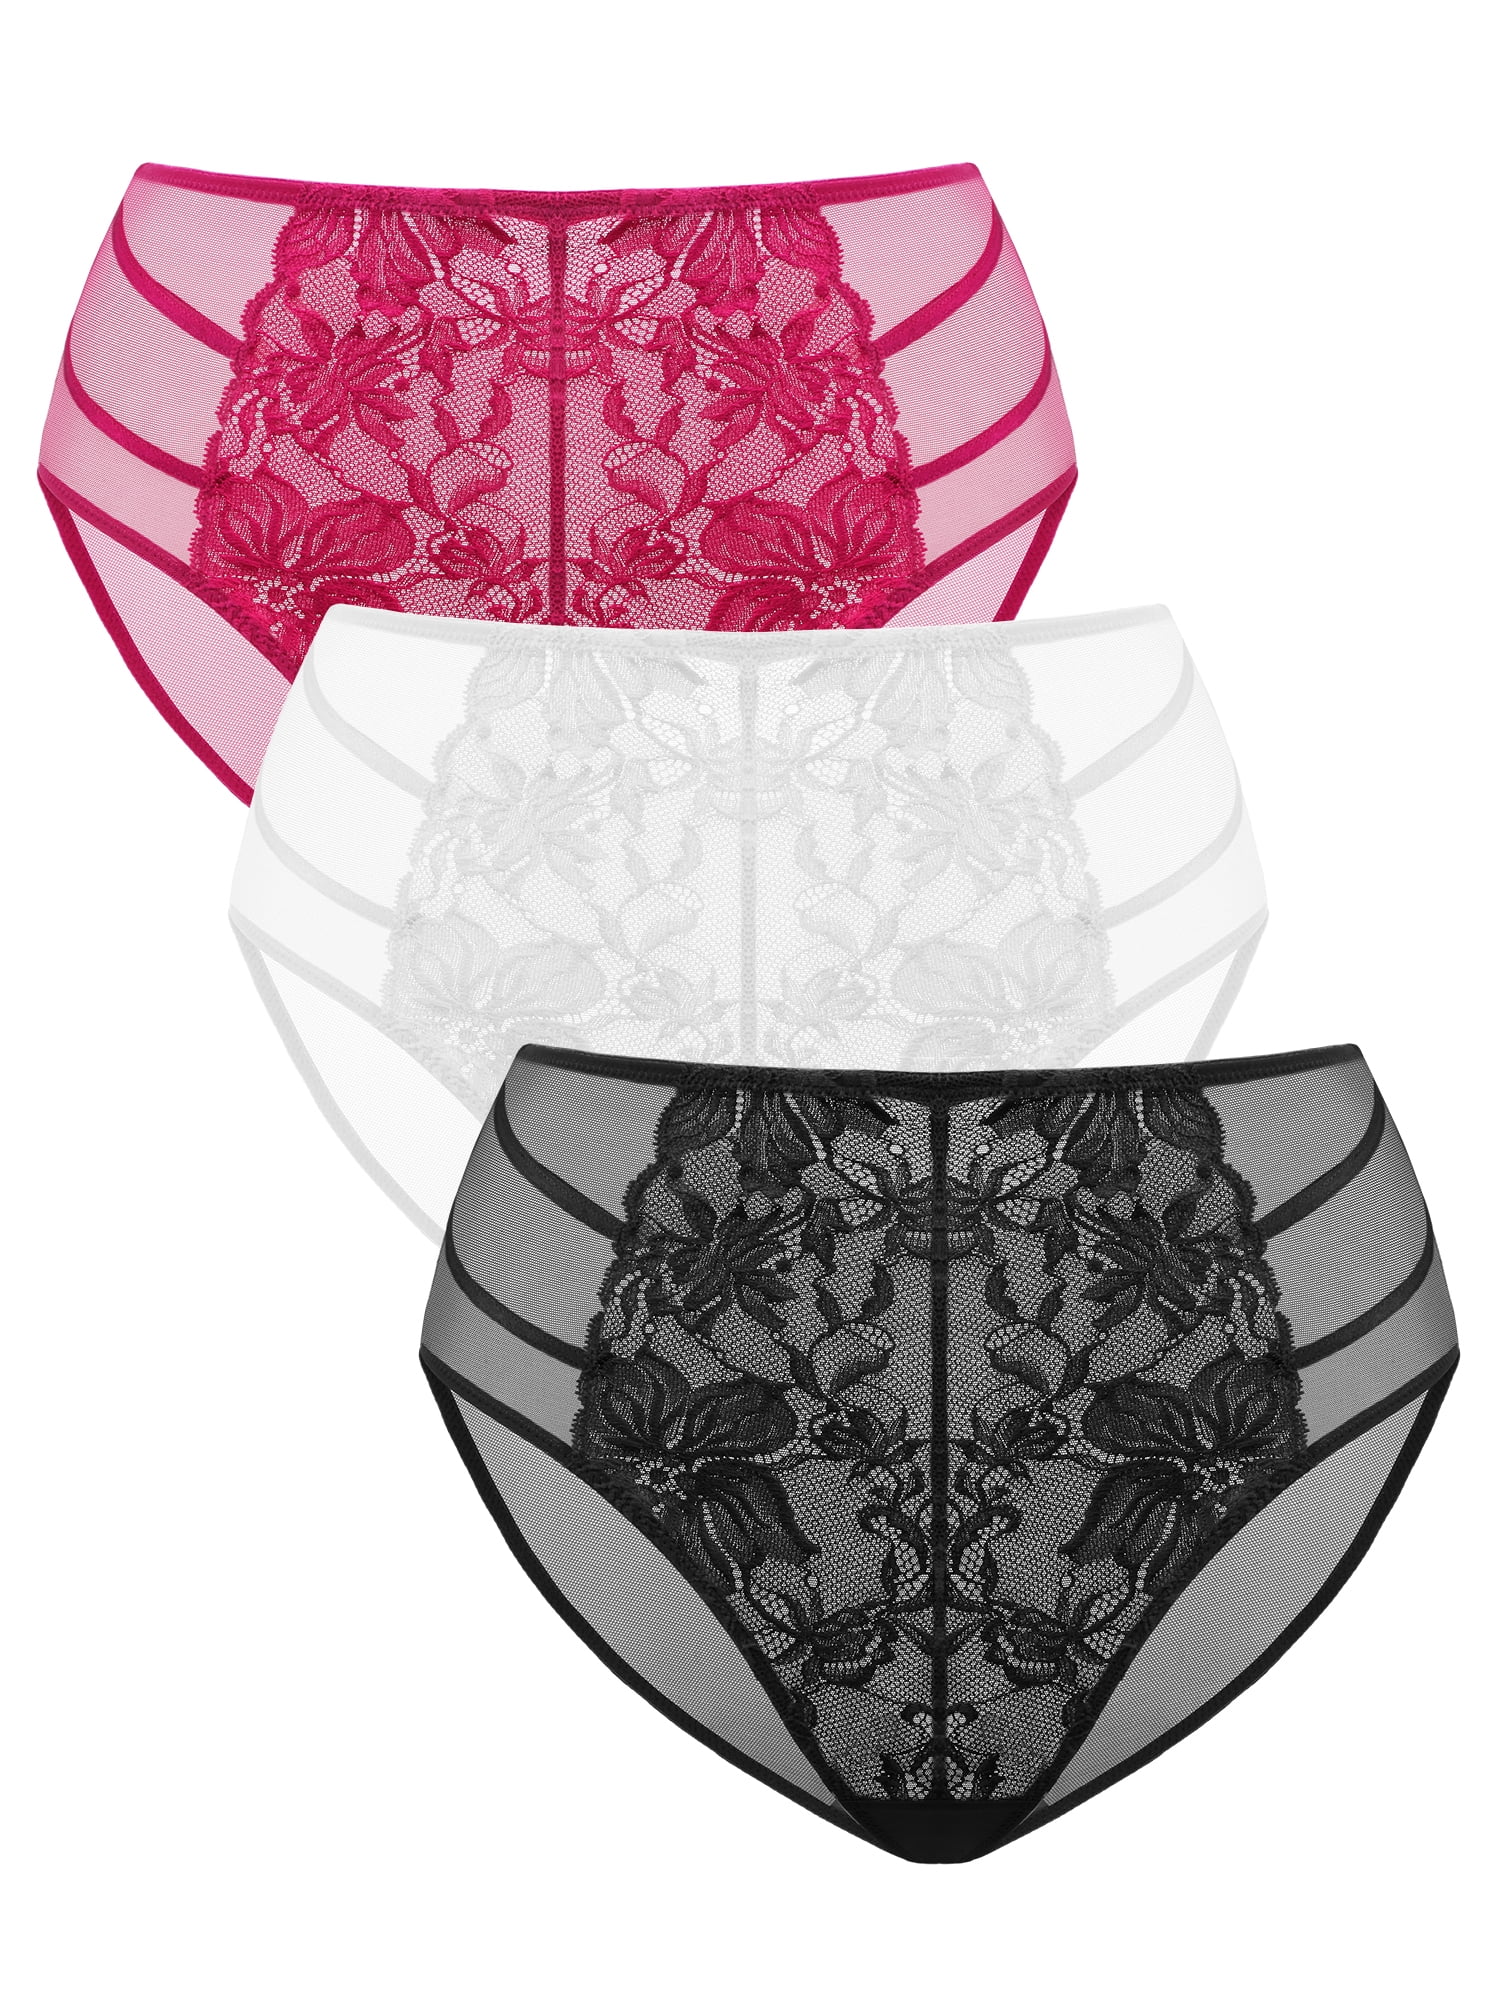 Bali Lacy Skamp Brief Panty, 8-Mocha Mist at  Women's Clothing store:  High Waist Panties